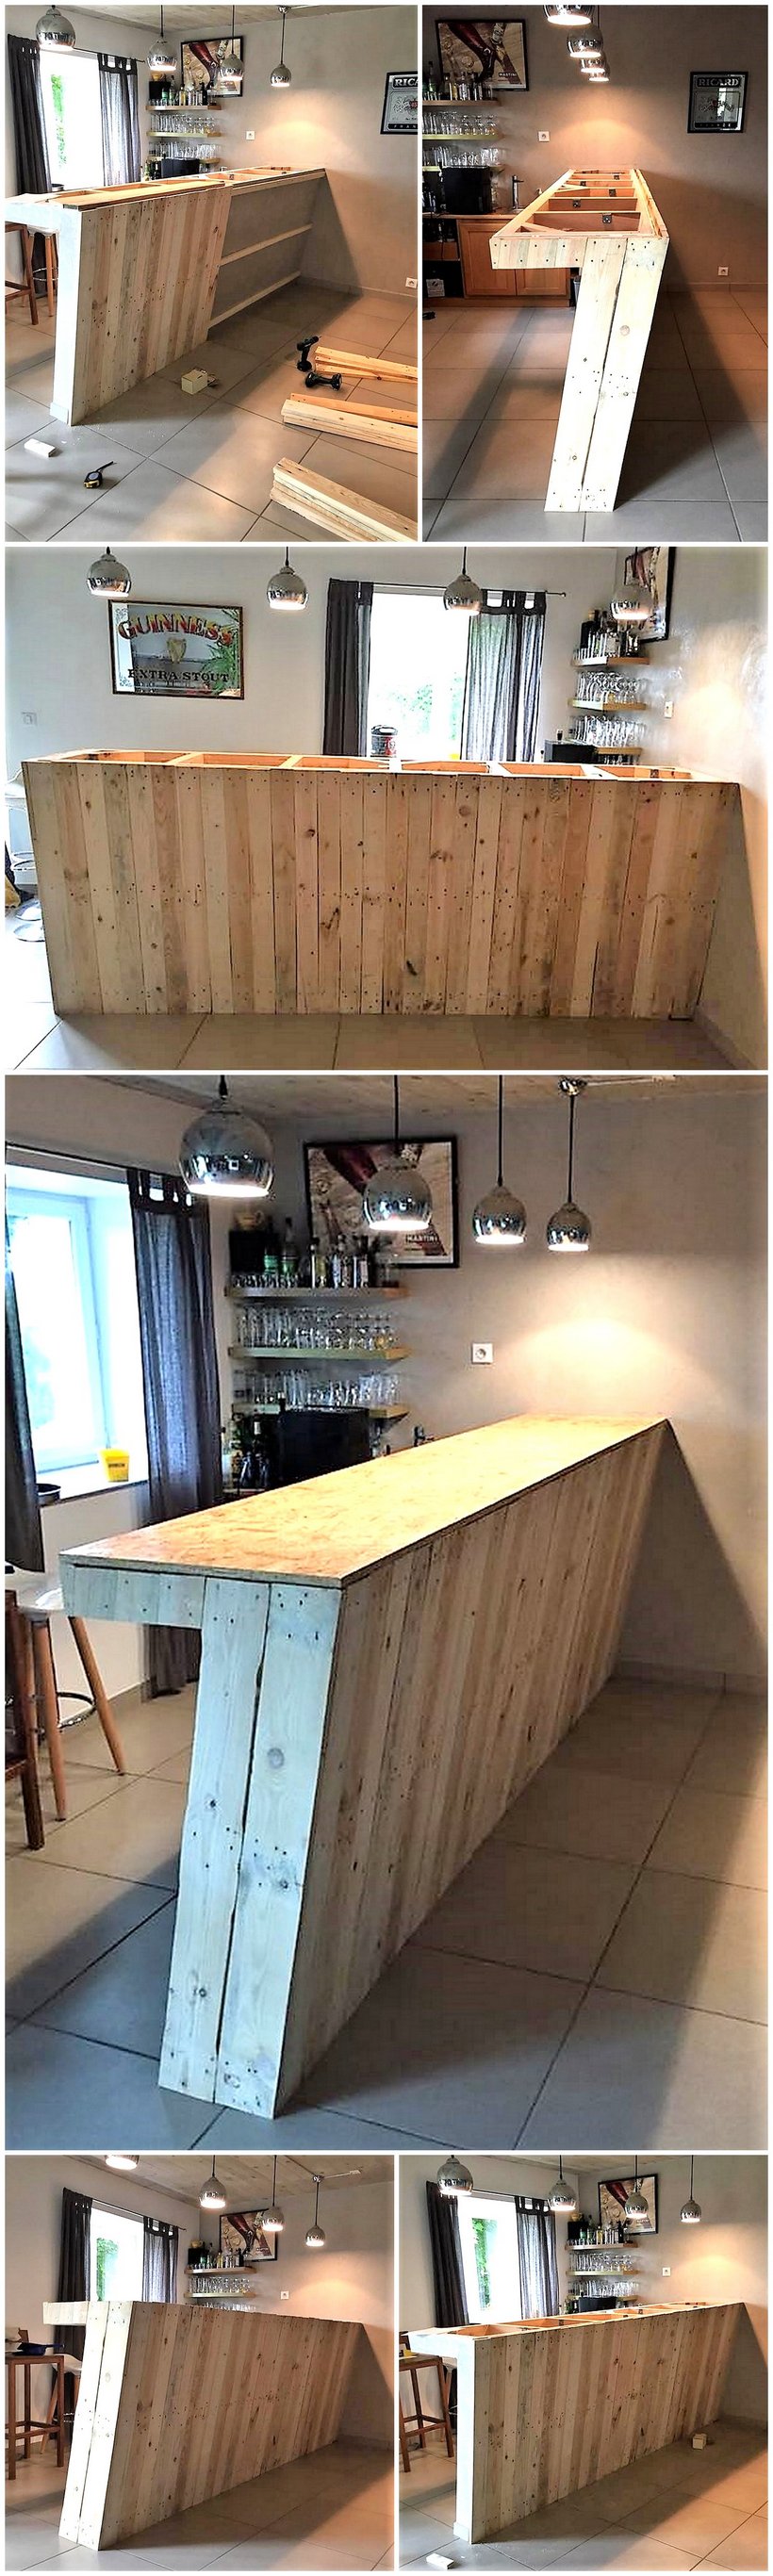 DIY wood pallet bar counter